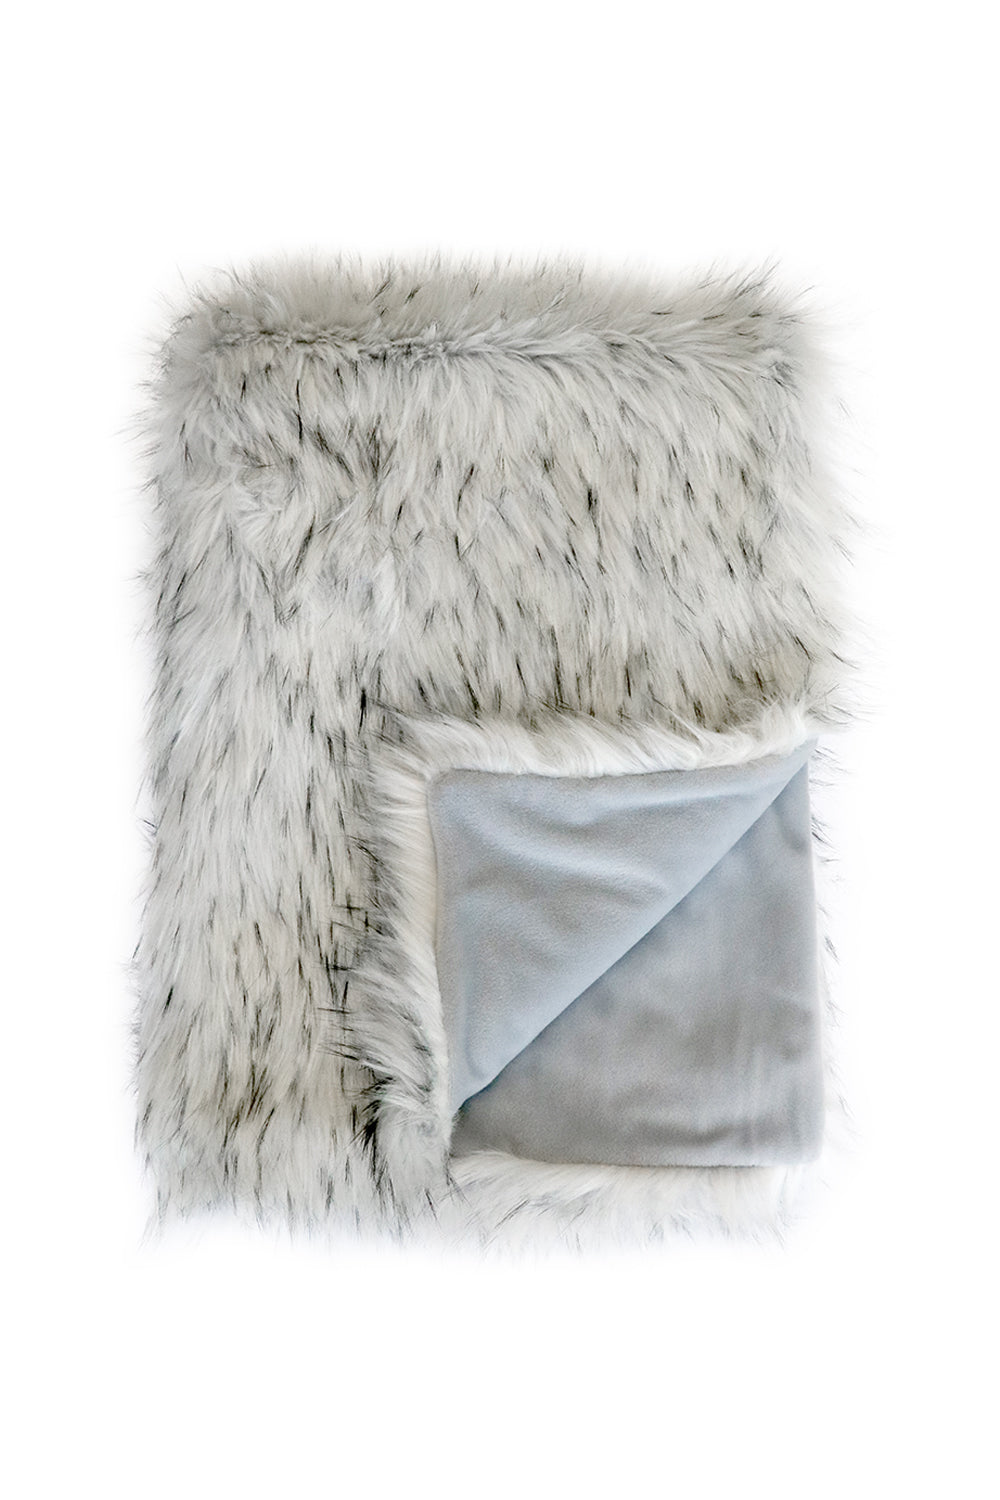 Luxury imitation faux fur throw in Alpine Coyote